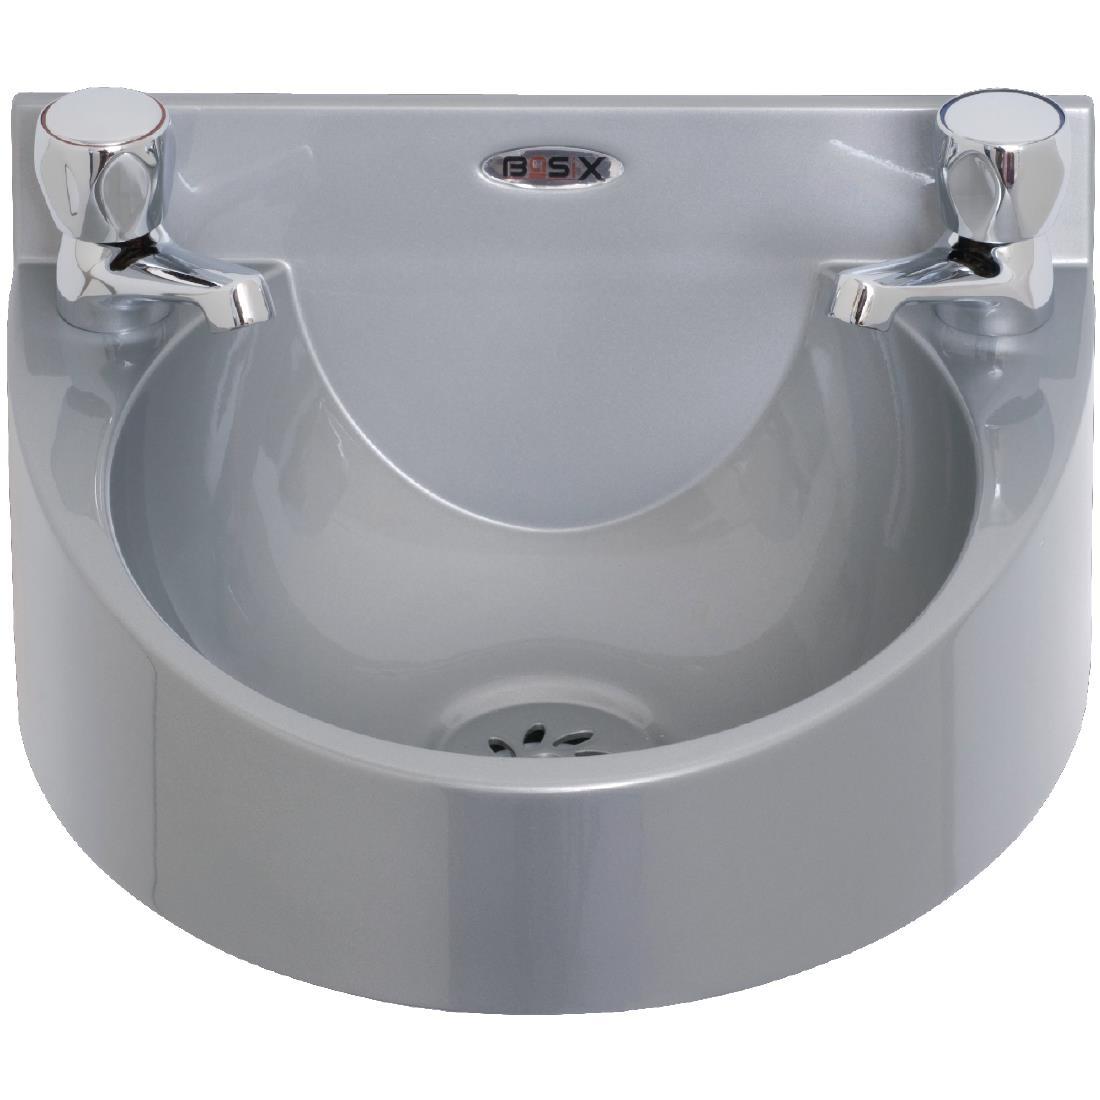 Basix Polycarbonate Hand Wash Basin Grey - CE986  - 1